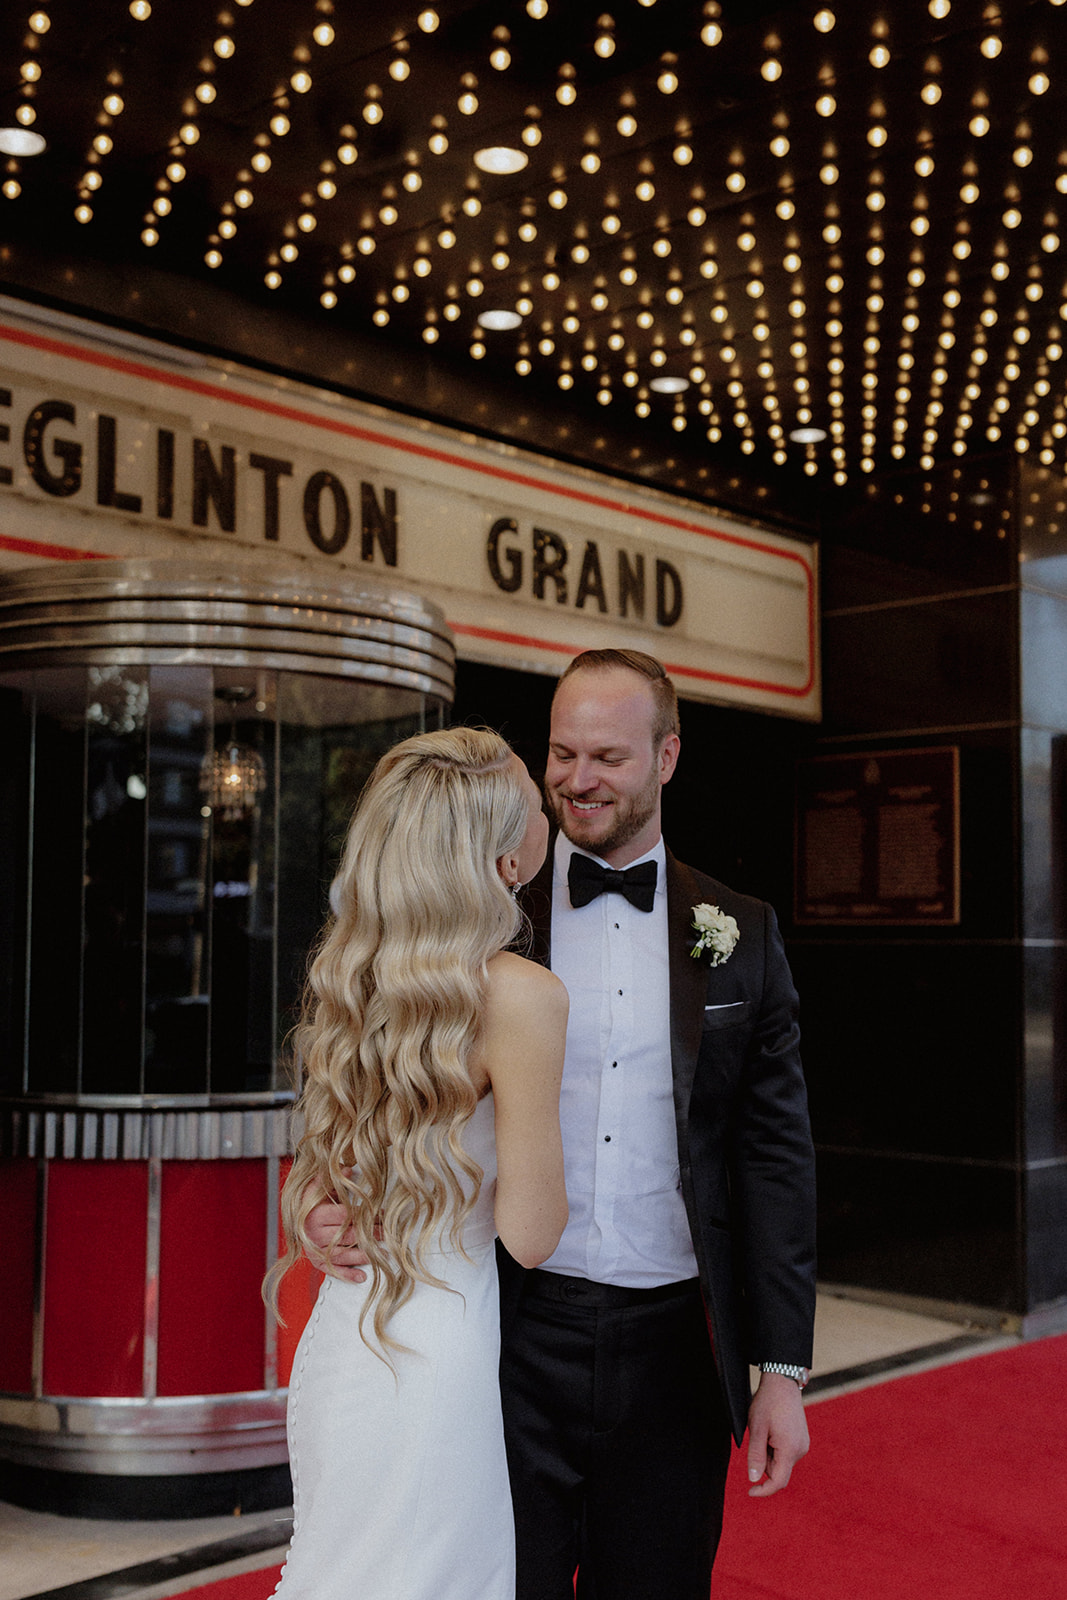 Eglinton Grand Wedding in Toronto Ontario